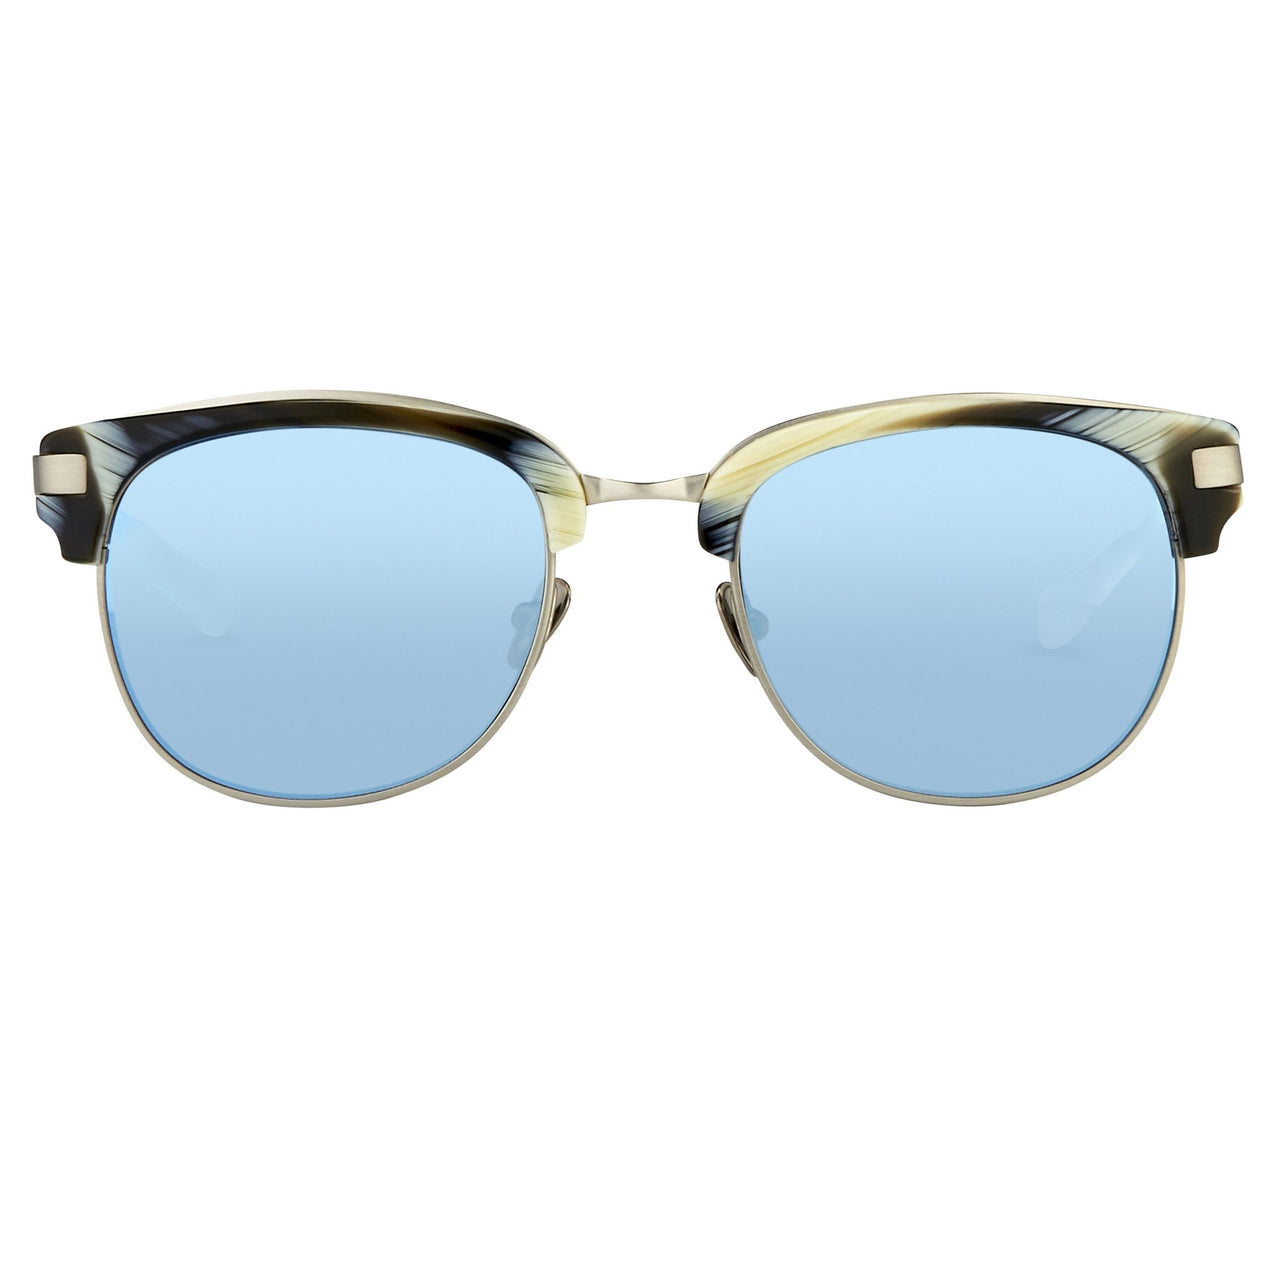 Kris Van Assche Sunglasses D-Frame Brown and Blue – Watches & Crystals